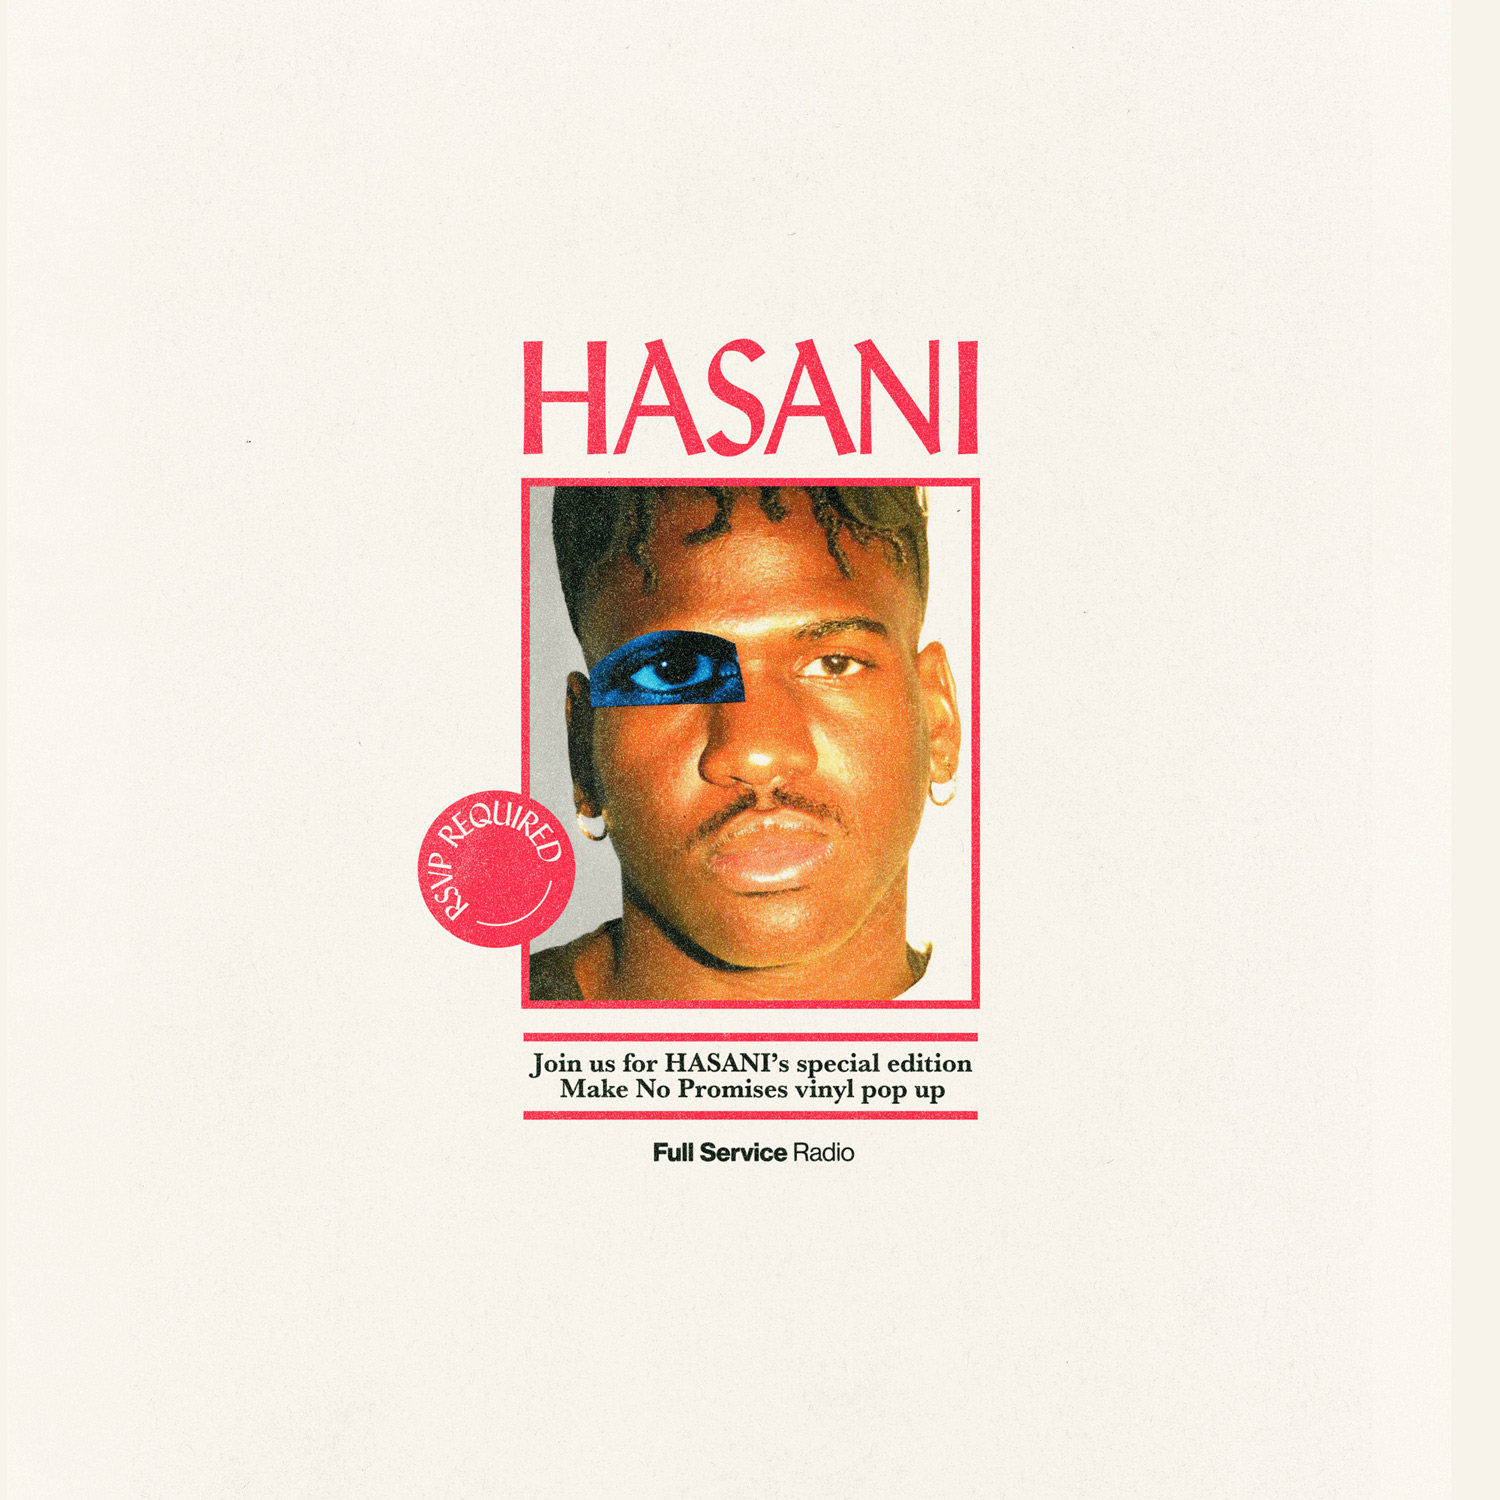 HASANI Vinyl Pop-up at the LINE DC